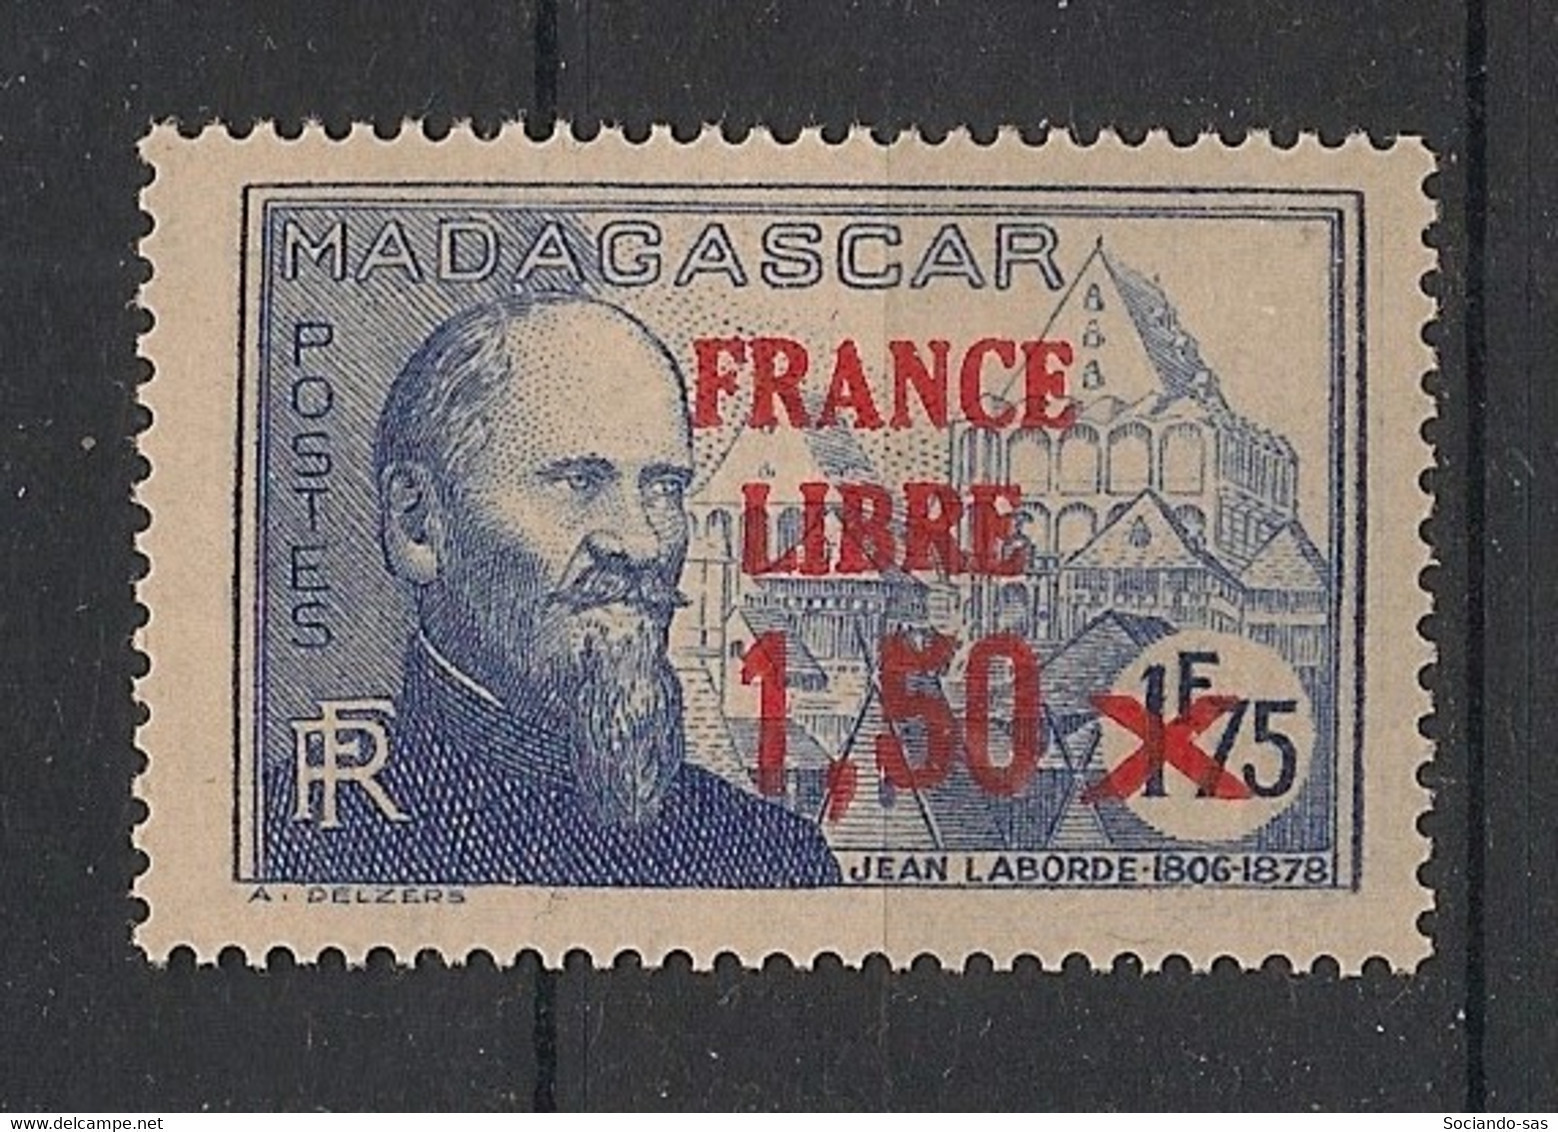 MADAGASCAR - 1942 - N°YT. 263 - France Libre 1f75 Sur 1f50 - Neuf Luxe ** / MNH / Postfrisch - Nuevos